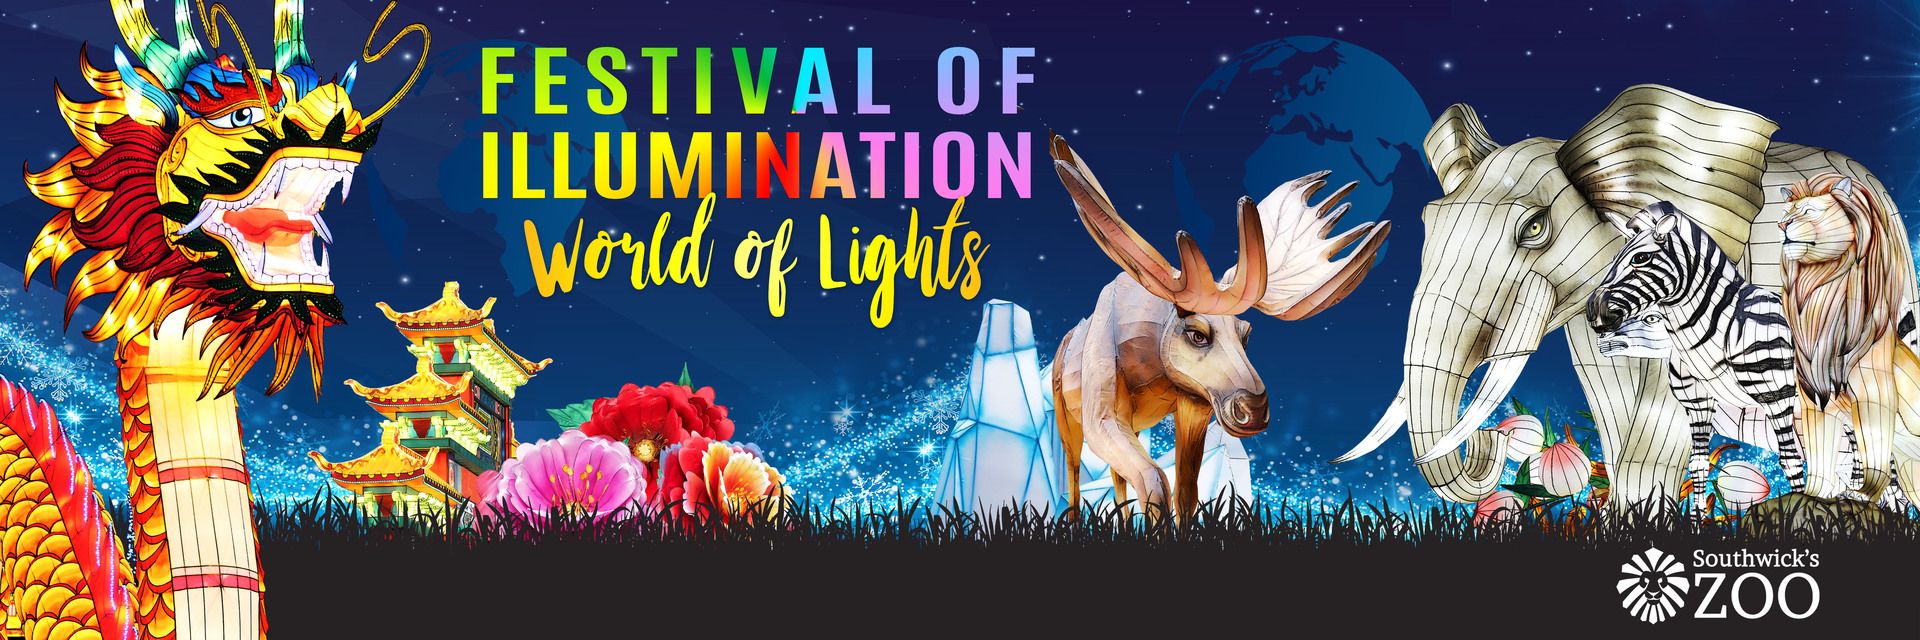 Festival of Illumination World of Lights at Southwick's Zoo, Mendon, Massachusetts, United States